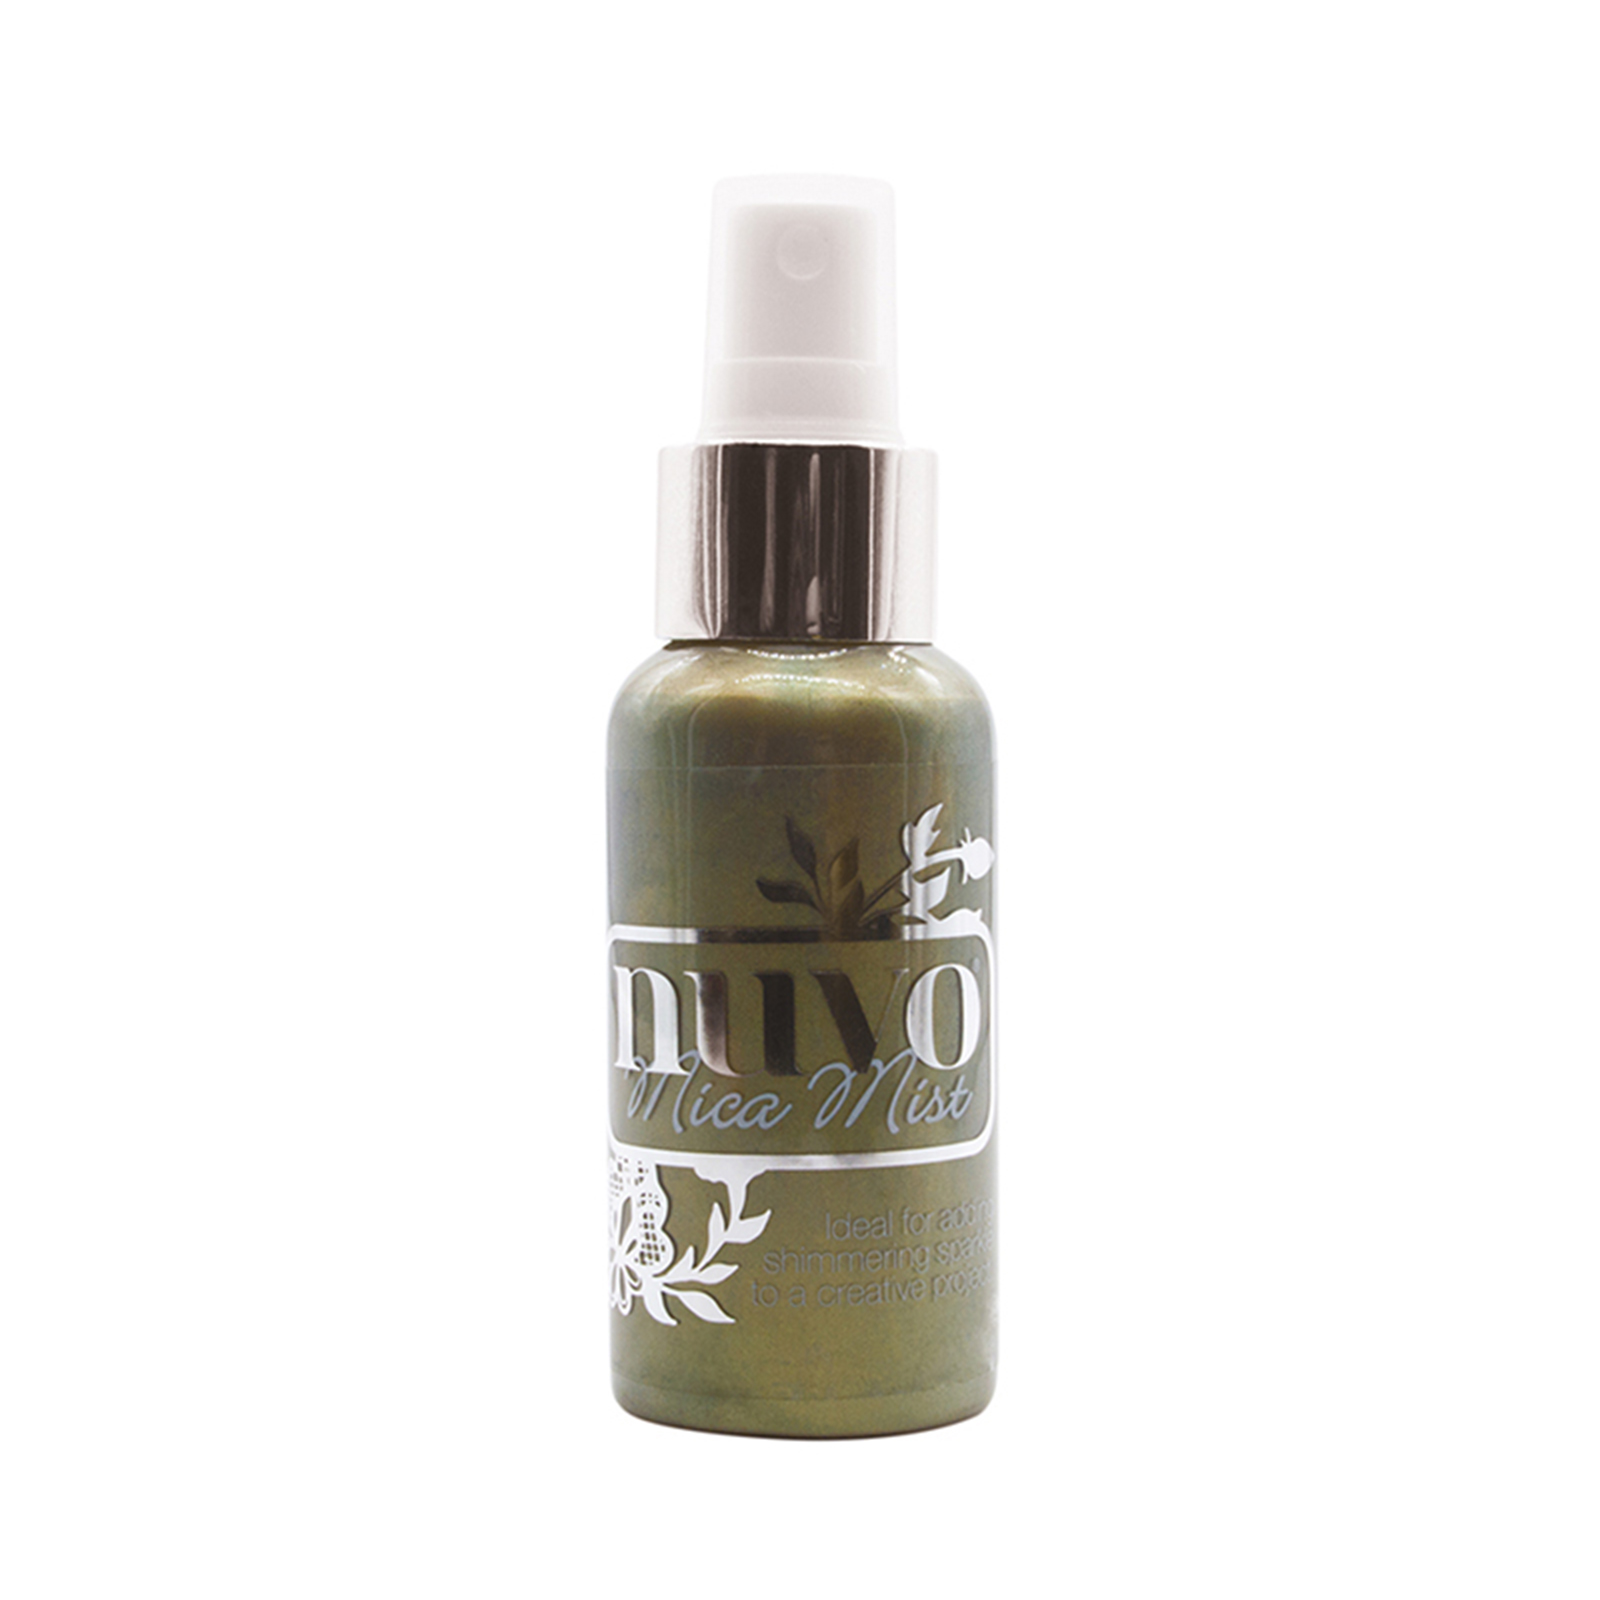 Nuvo • Mica mist Wild olive